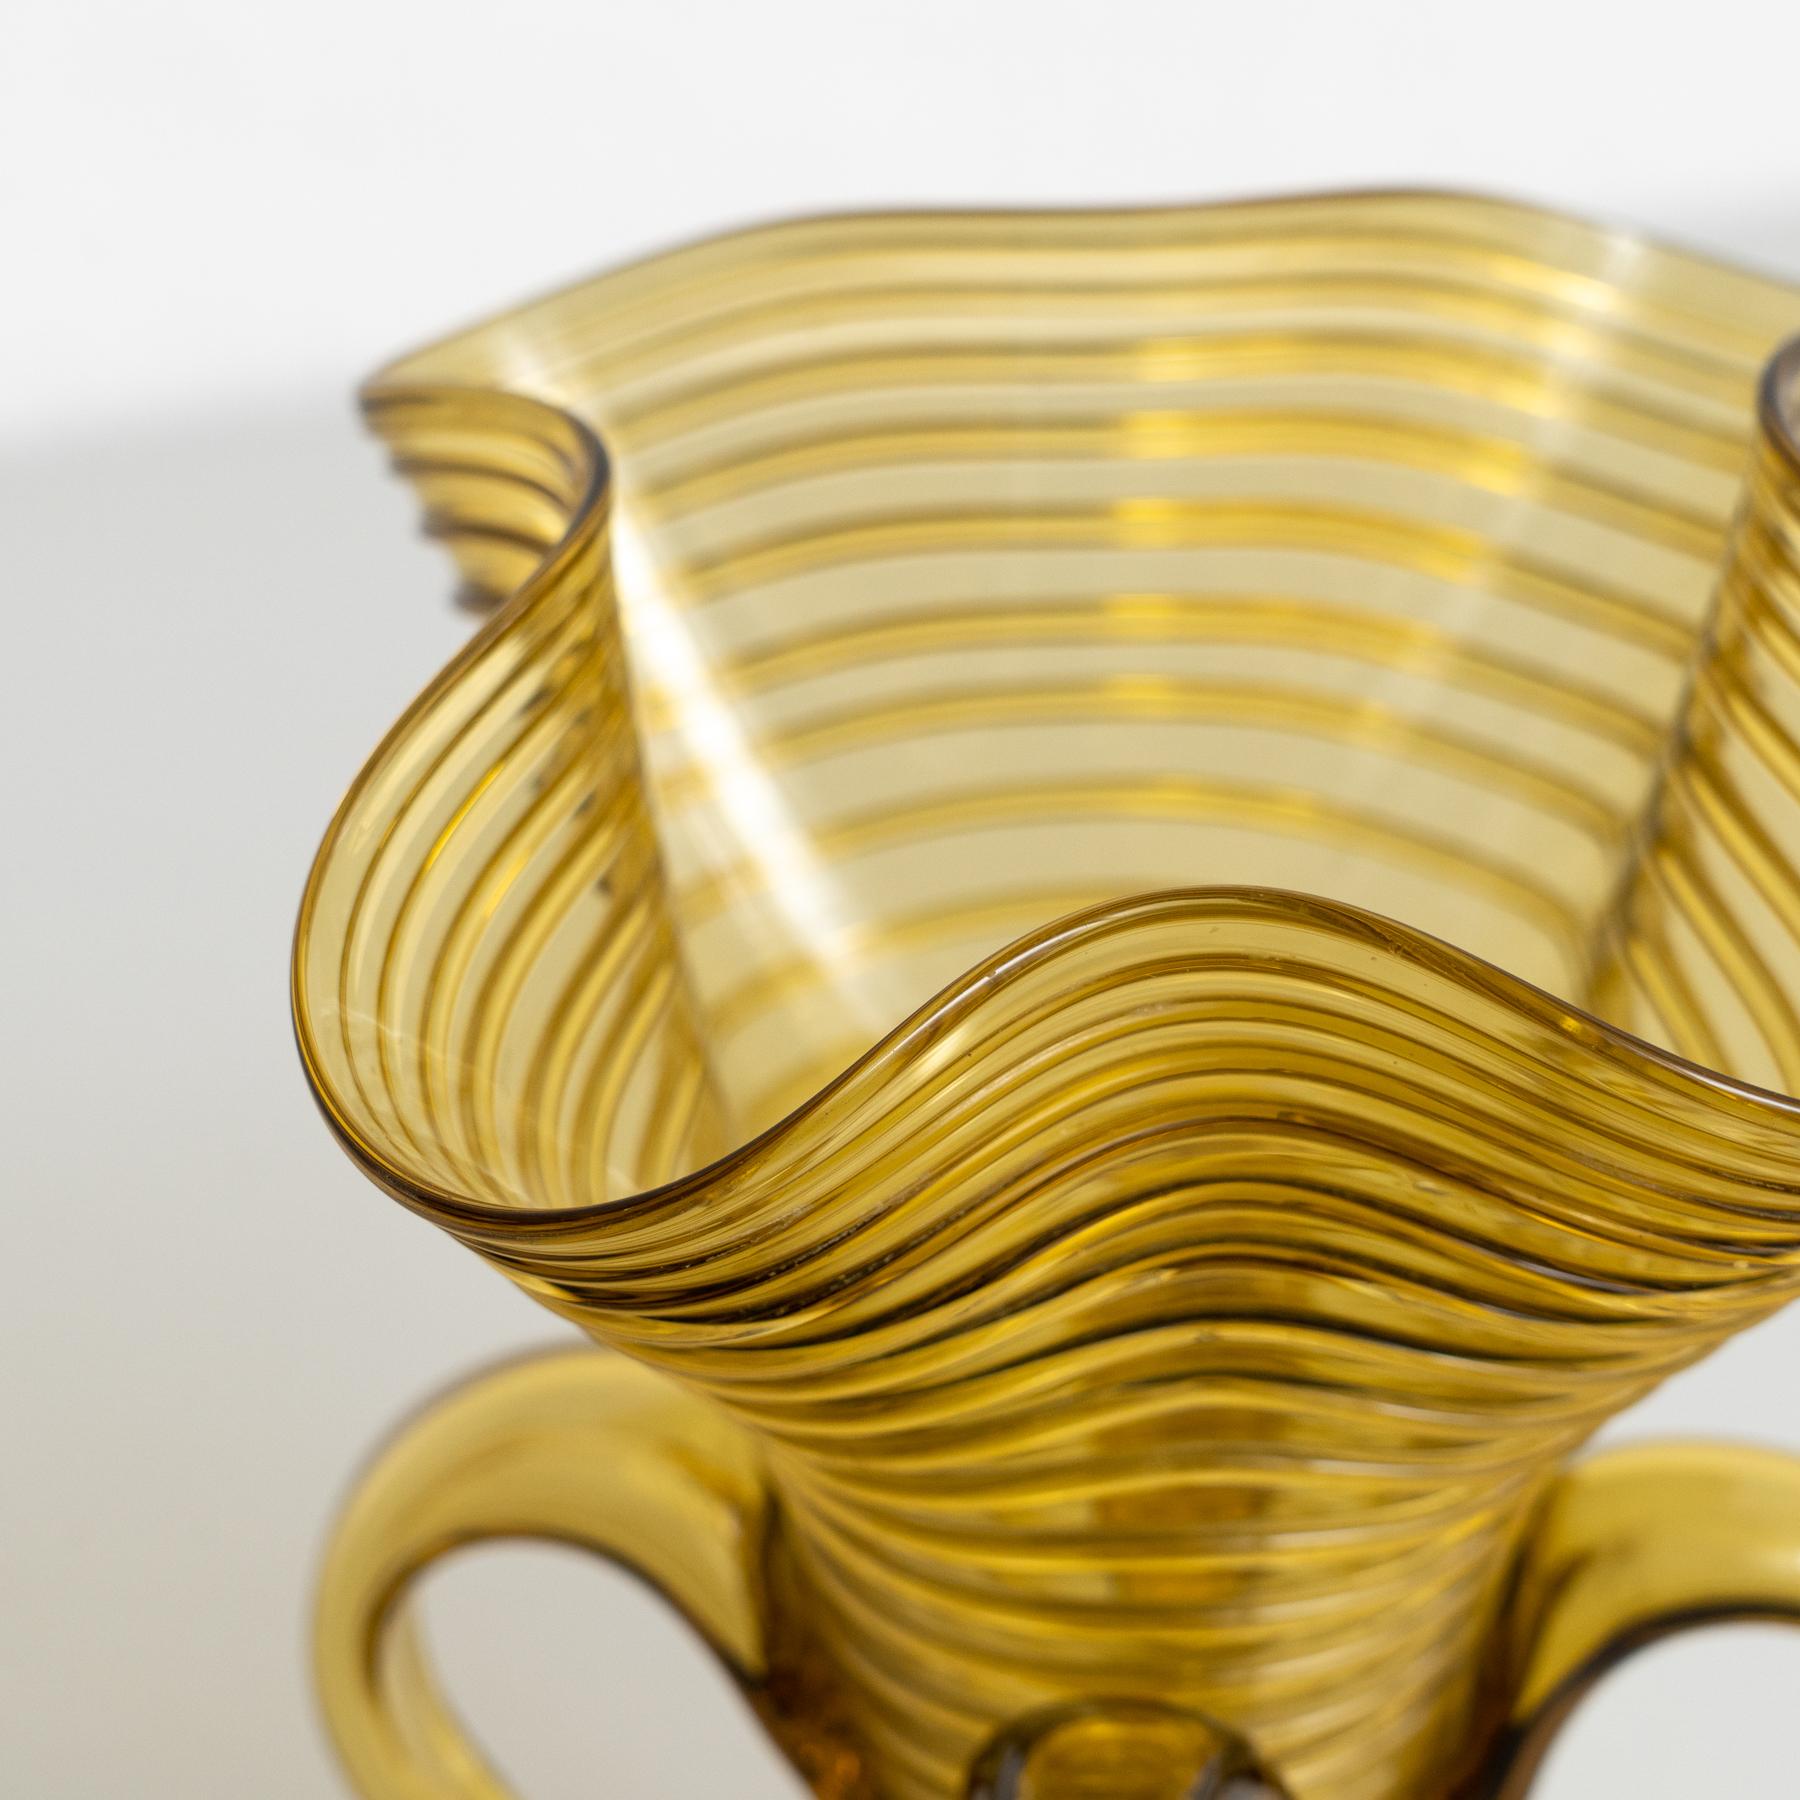 Elegant Amber Blown Glass Vase - Early 20th Century Spanish Artistry For Sale 3